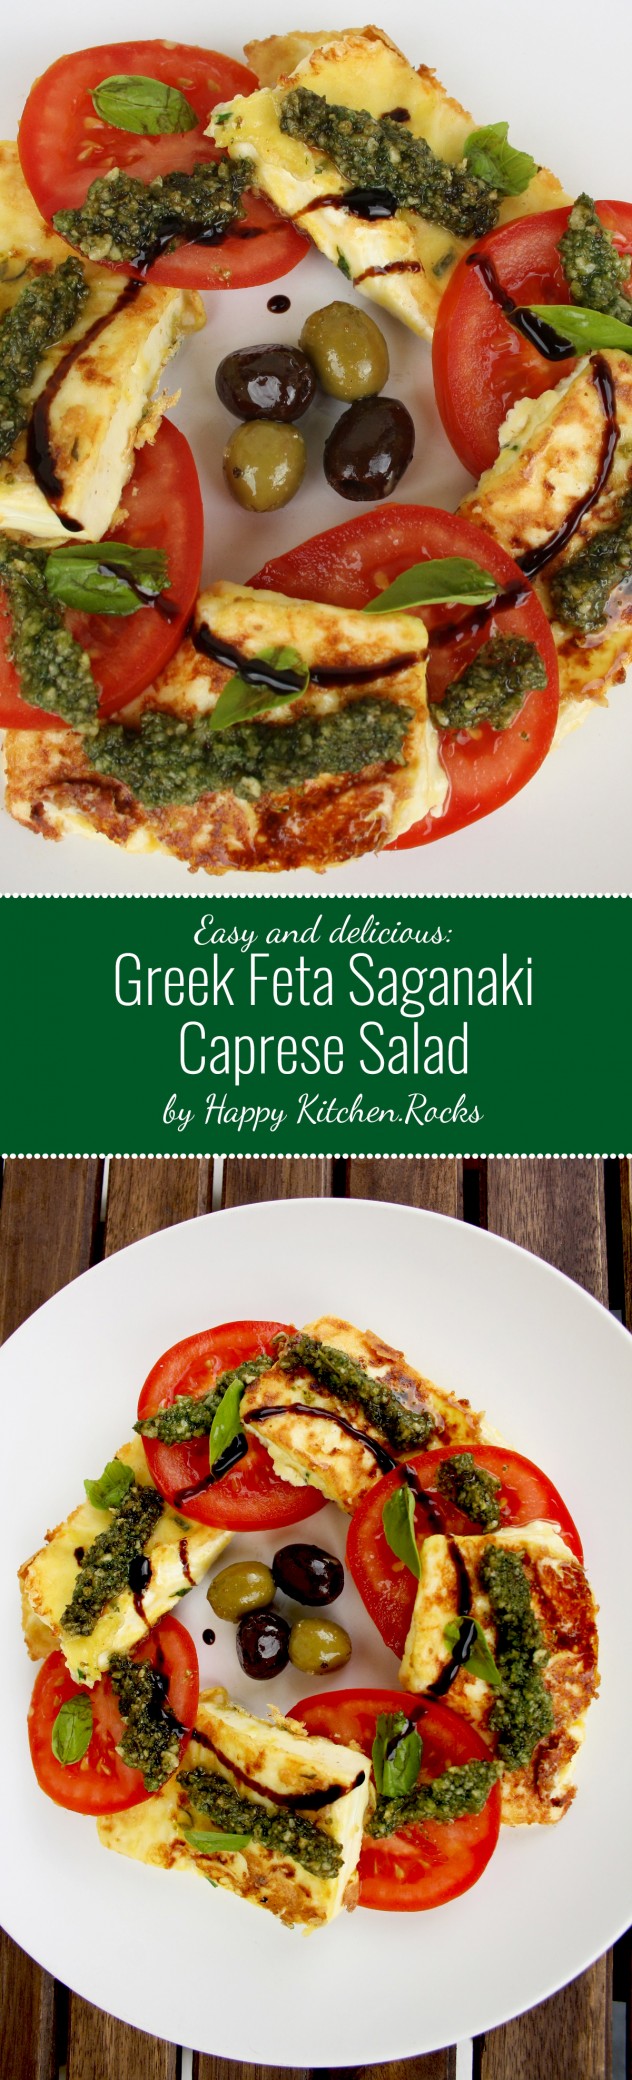 Greek Feta Saganaki Caprese Salad Recipe - easy and incredibly delicious! Made of tomatoes, fried Greek feta saganaki cheese with pesto sauce and Balsamico.